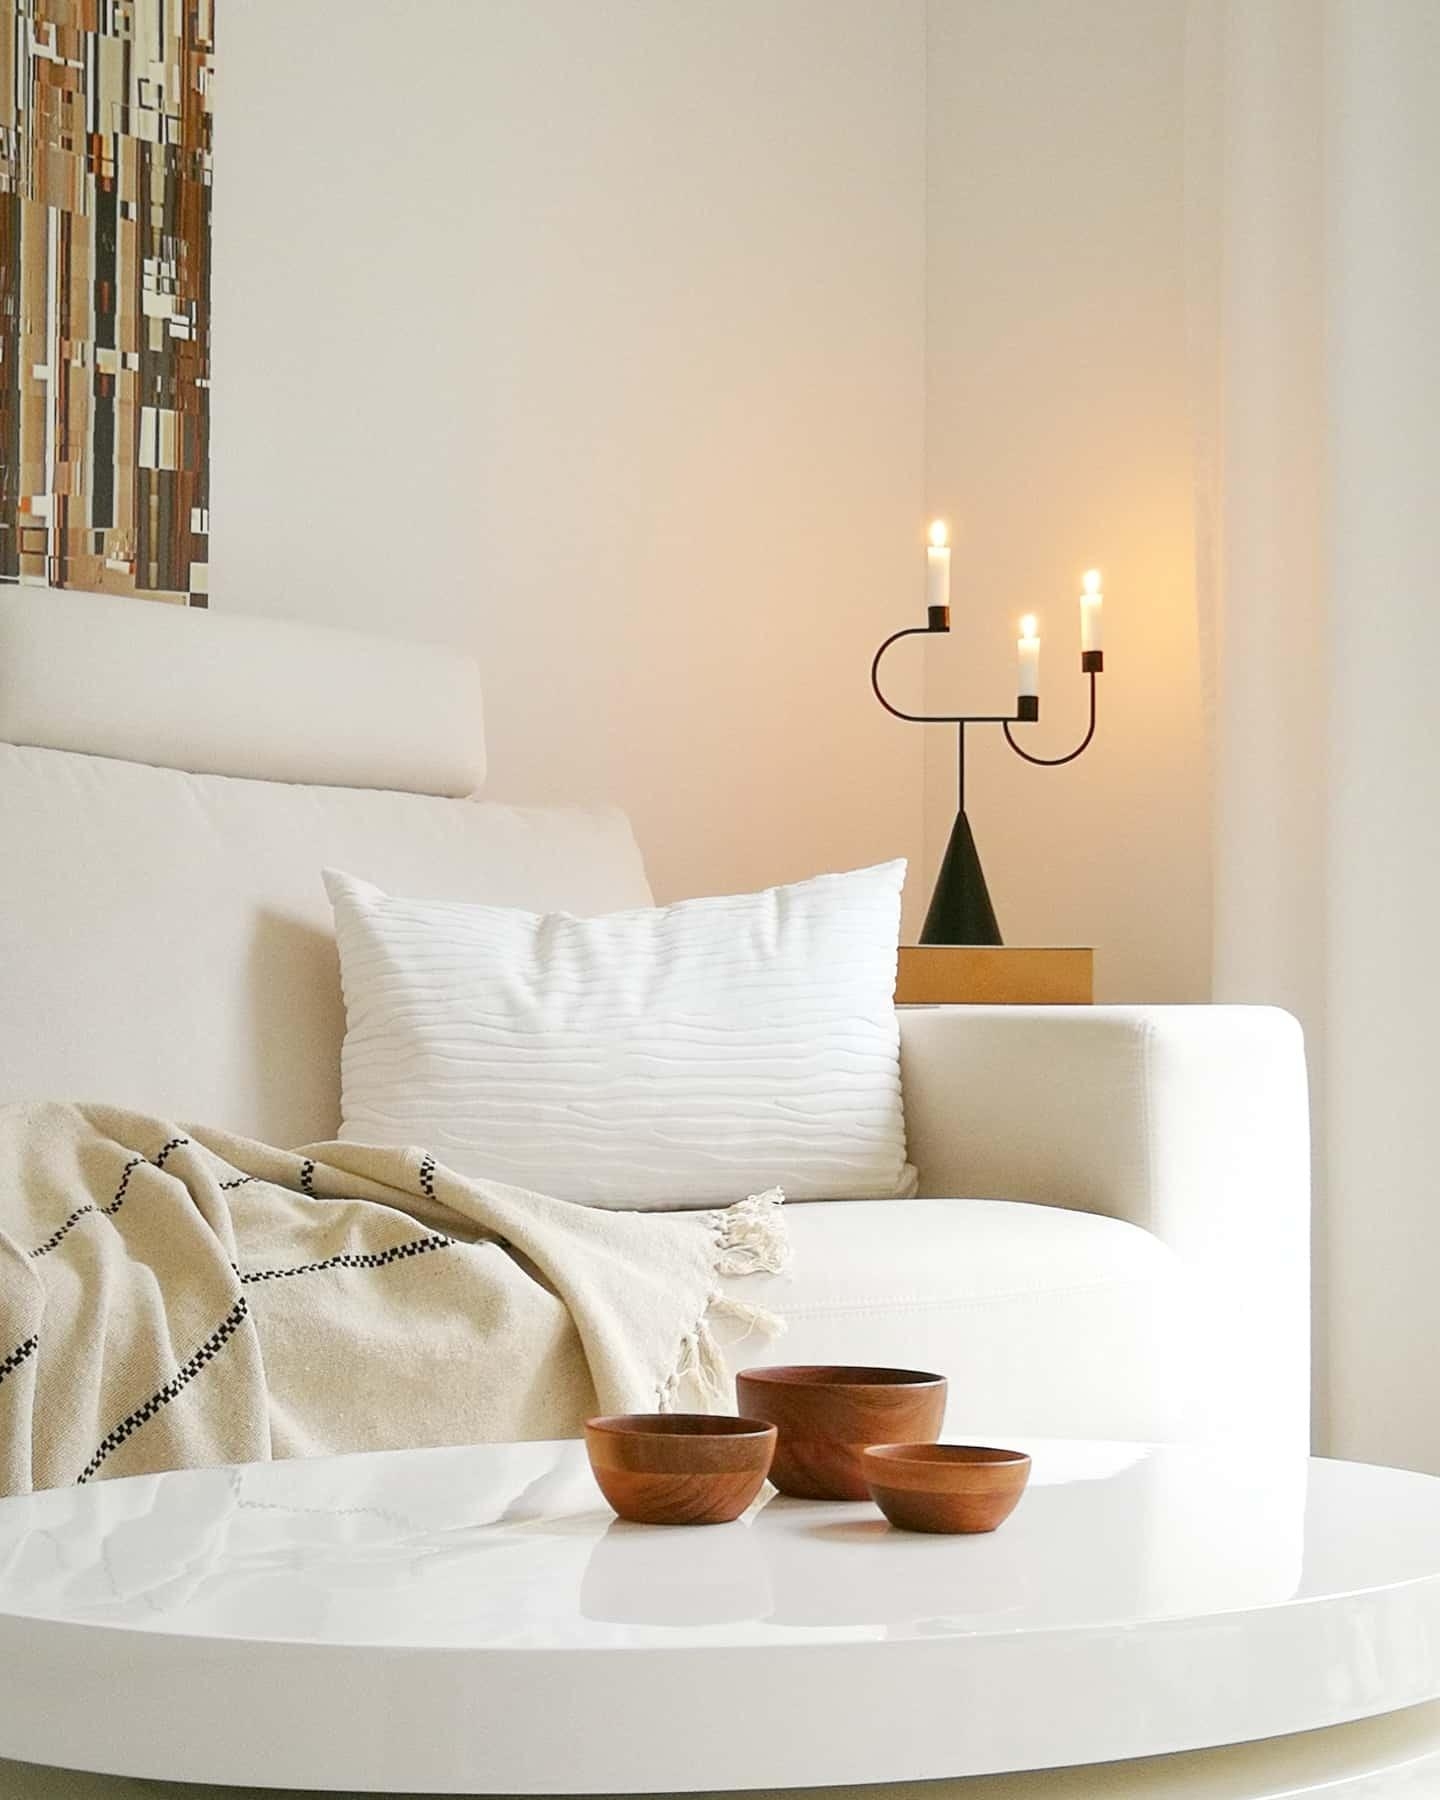 #skandistyle #cozycorner #livingroom #homesweethome #mylivingroom #kerzenleuchter #wohnzimmer #skandinavischwohnen 